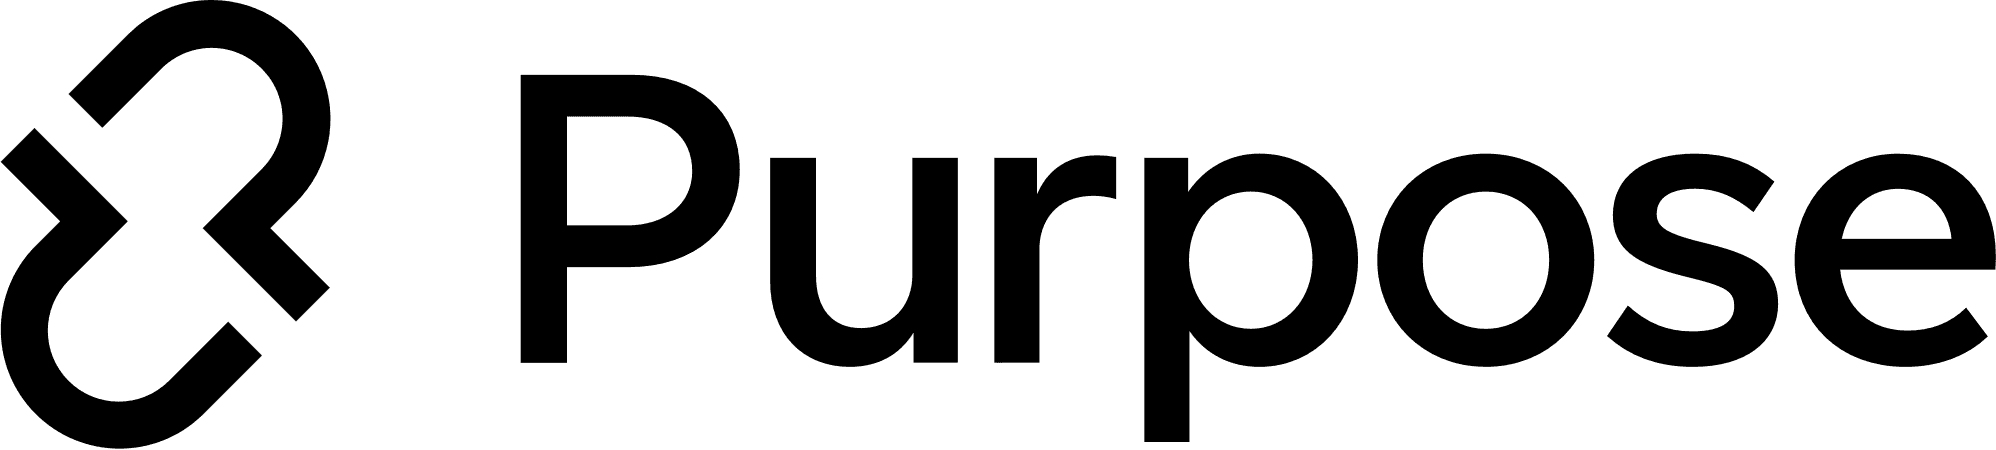 Purpose finance logo